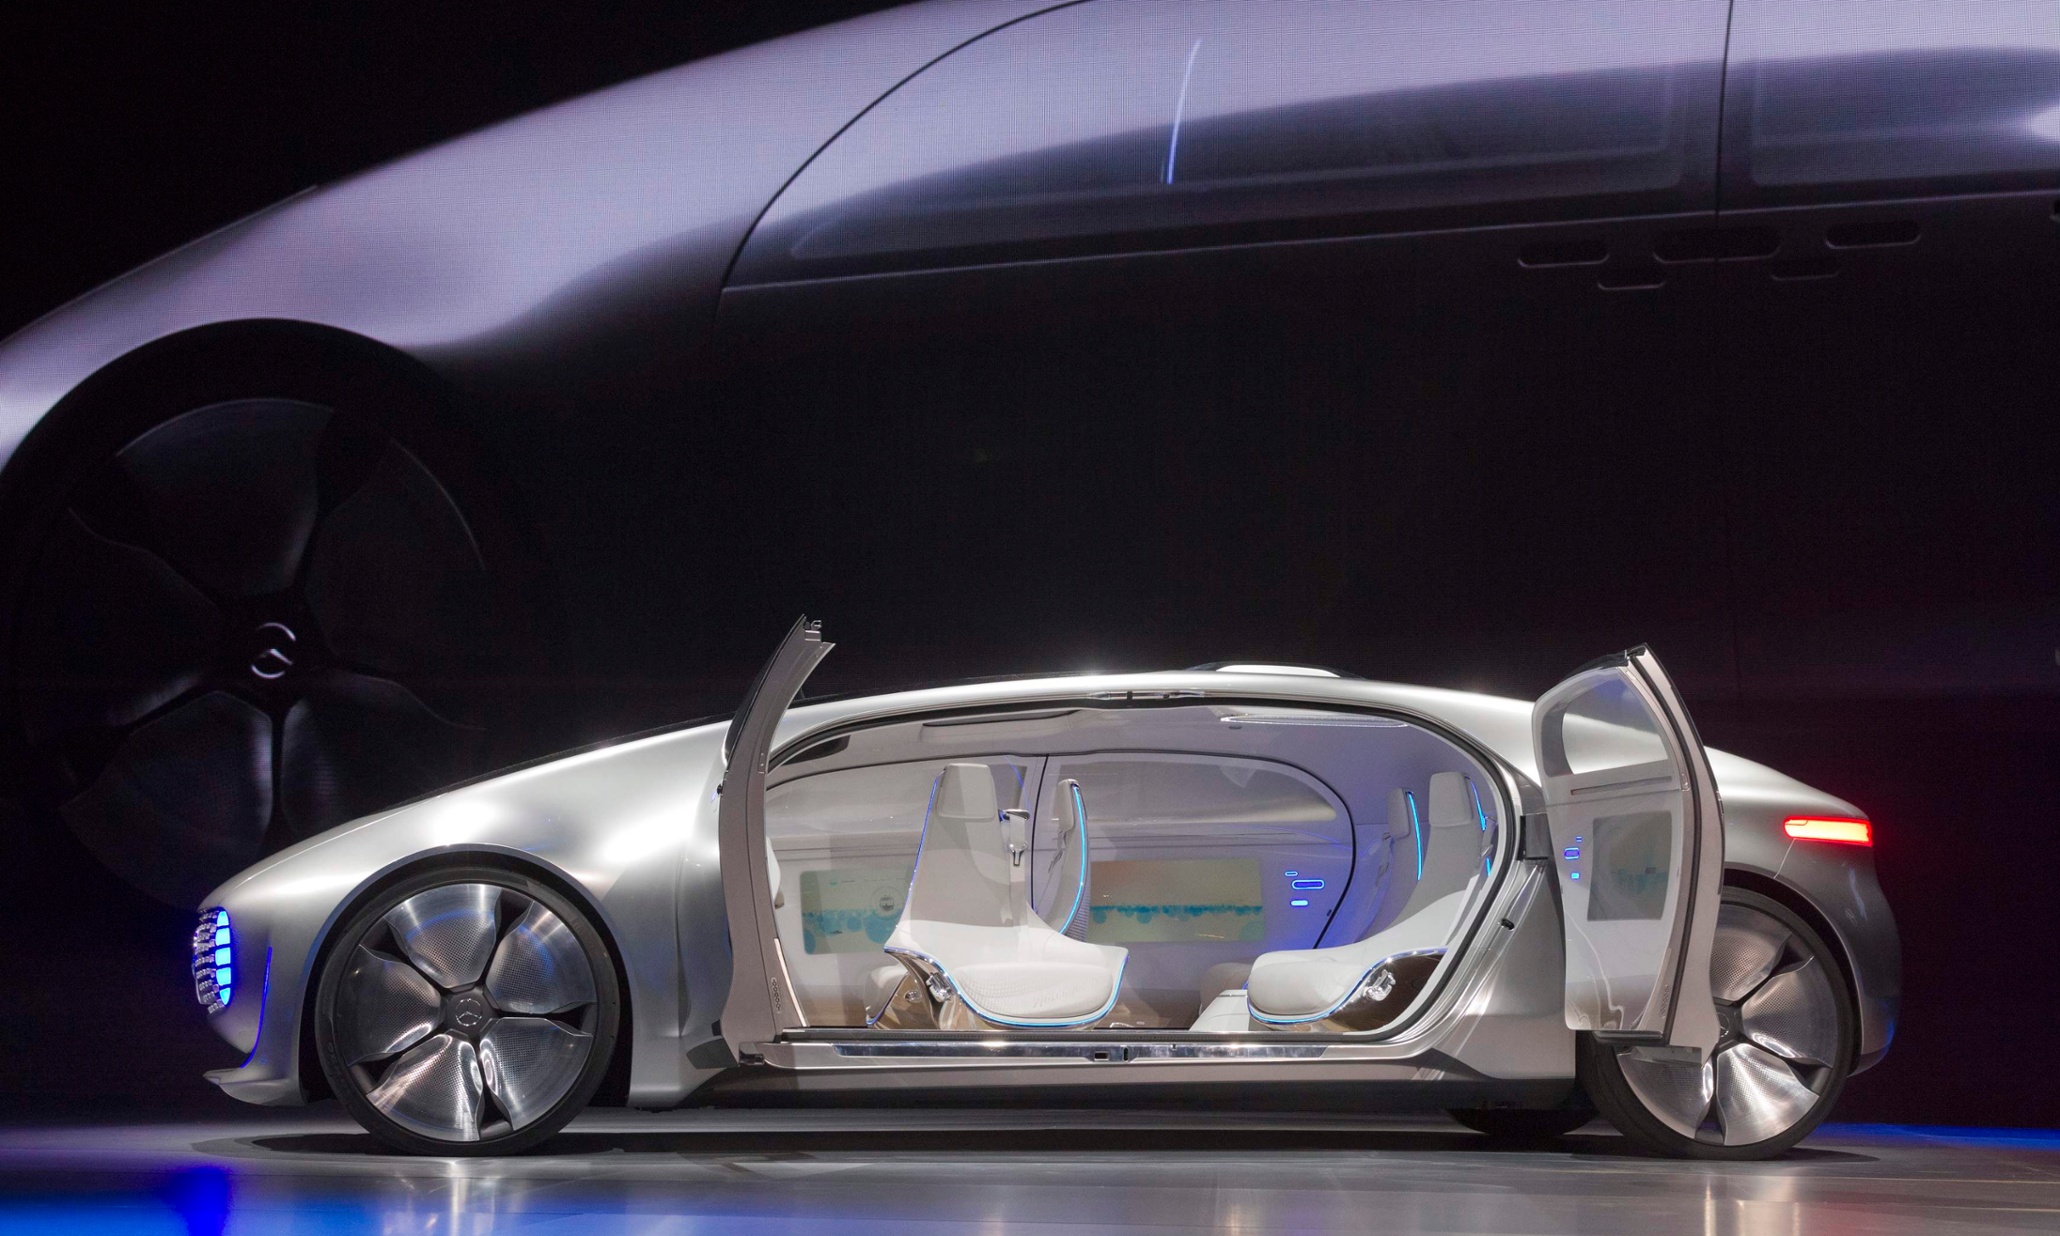 MercedesBenz announces plans to develop luxury driverless cars